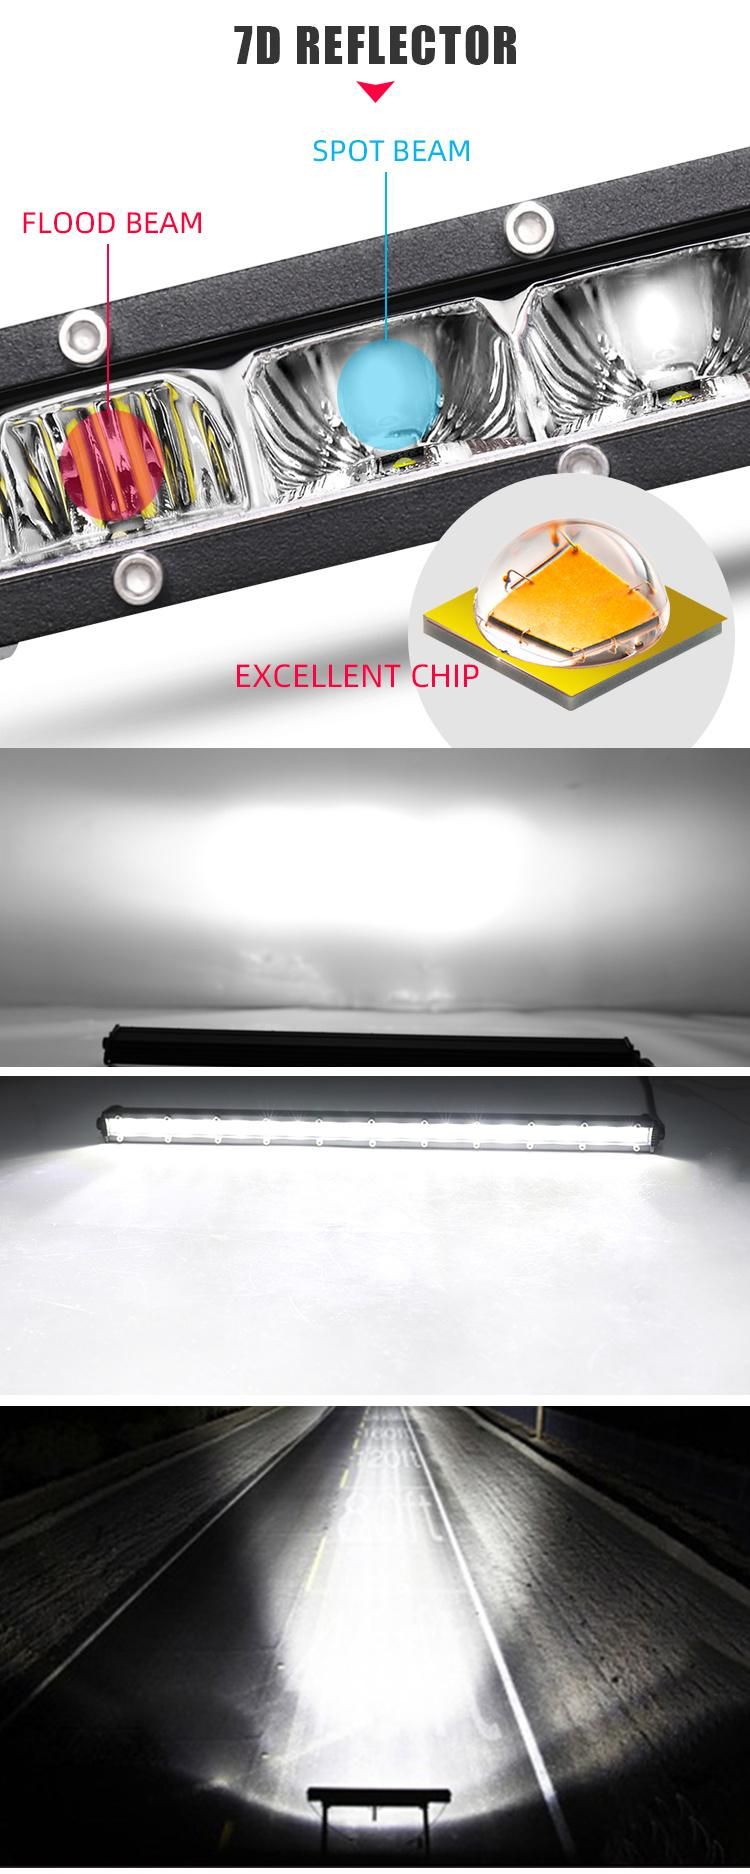 Wholesale Price High Power Lumen Customize 8" 14" 20" 26" Driving Light Single Row LED Light Bar